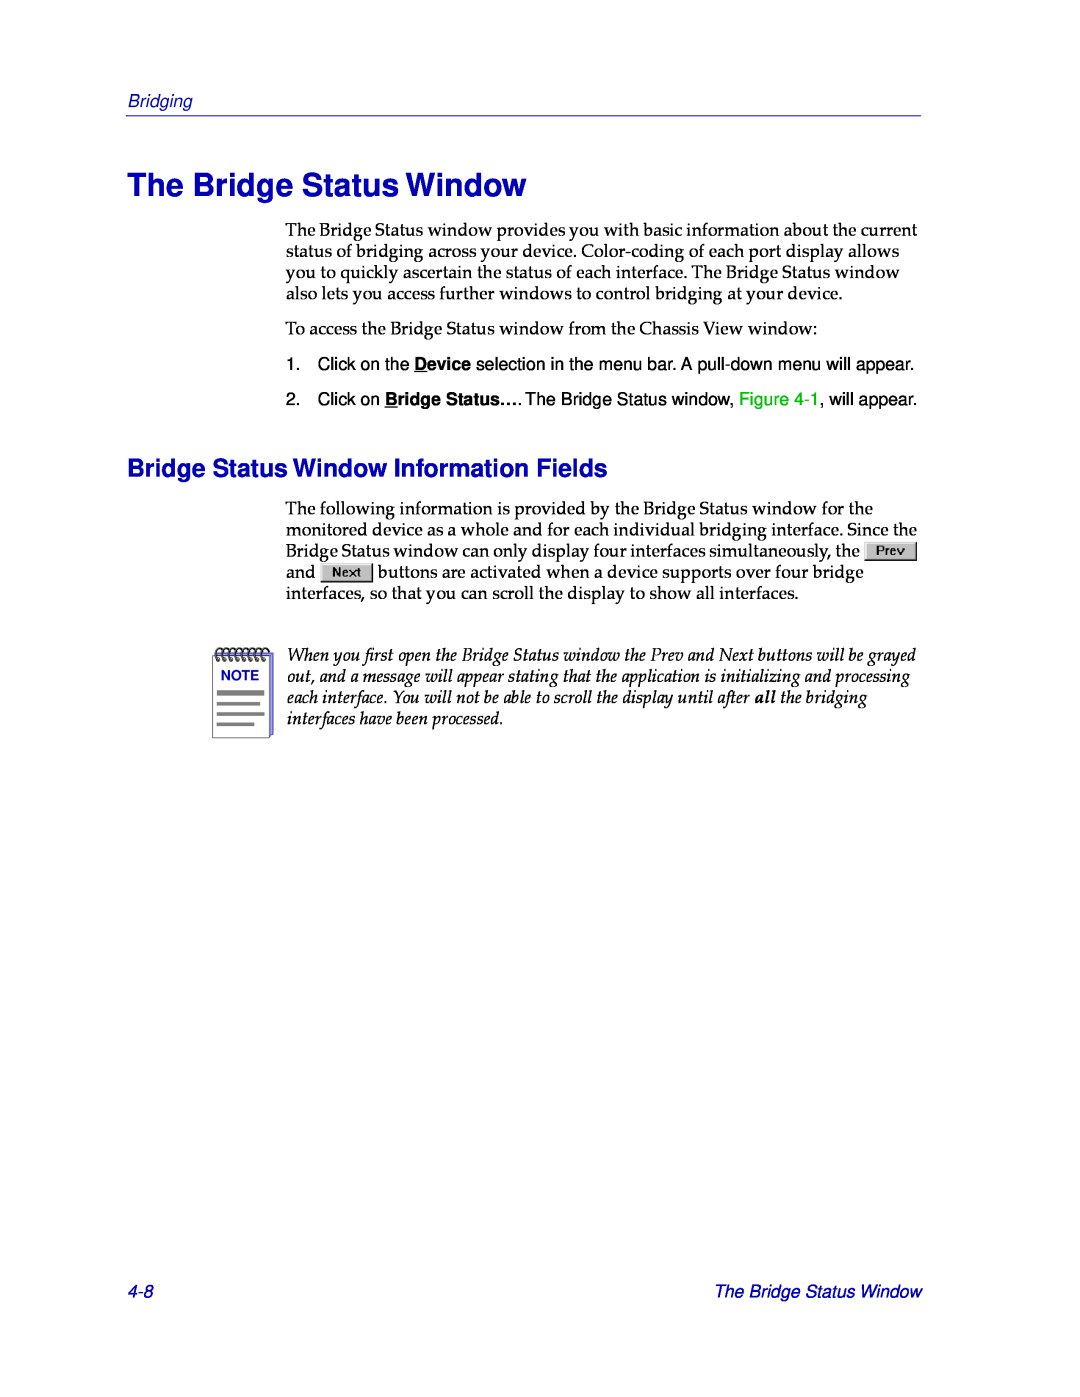 Cabletron Systems CSX400, CSX200 manual The Bridge Status Window, Bridge Status Window Information Fields, Bridging 